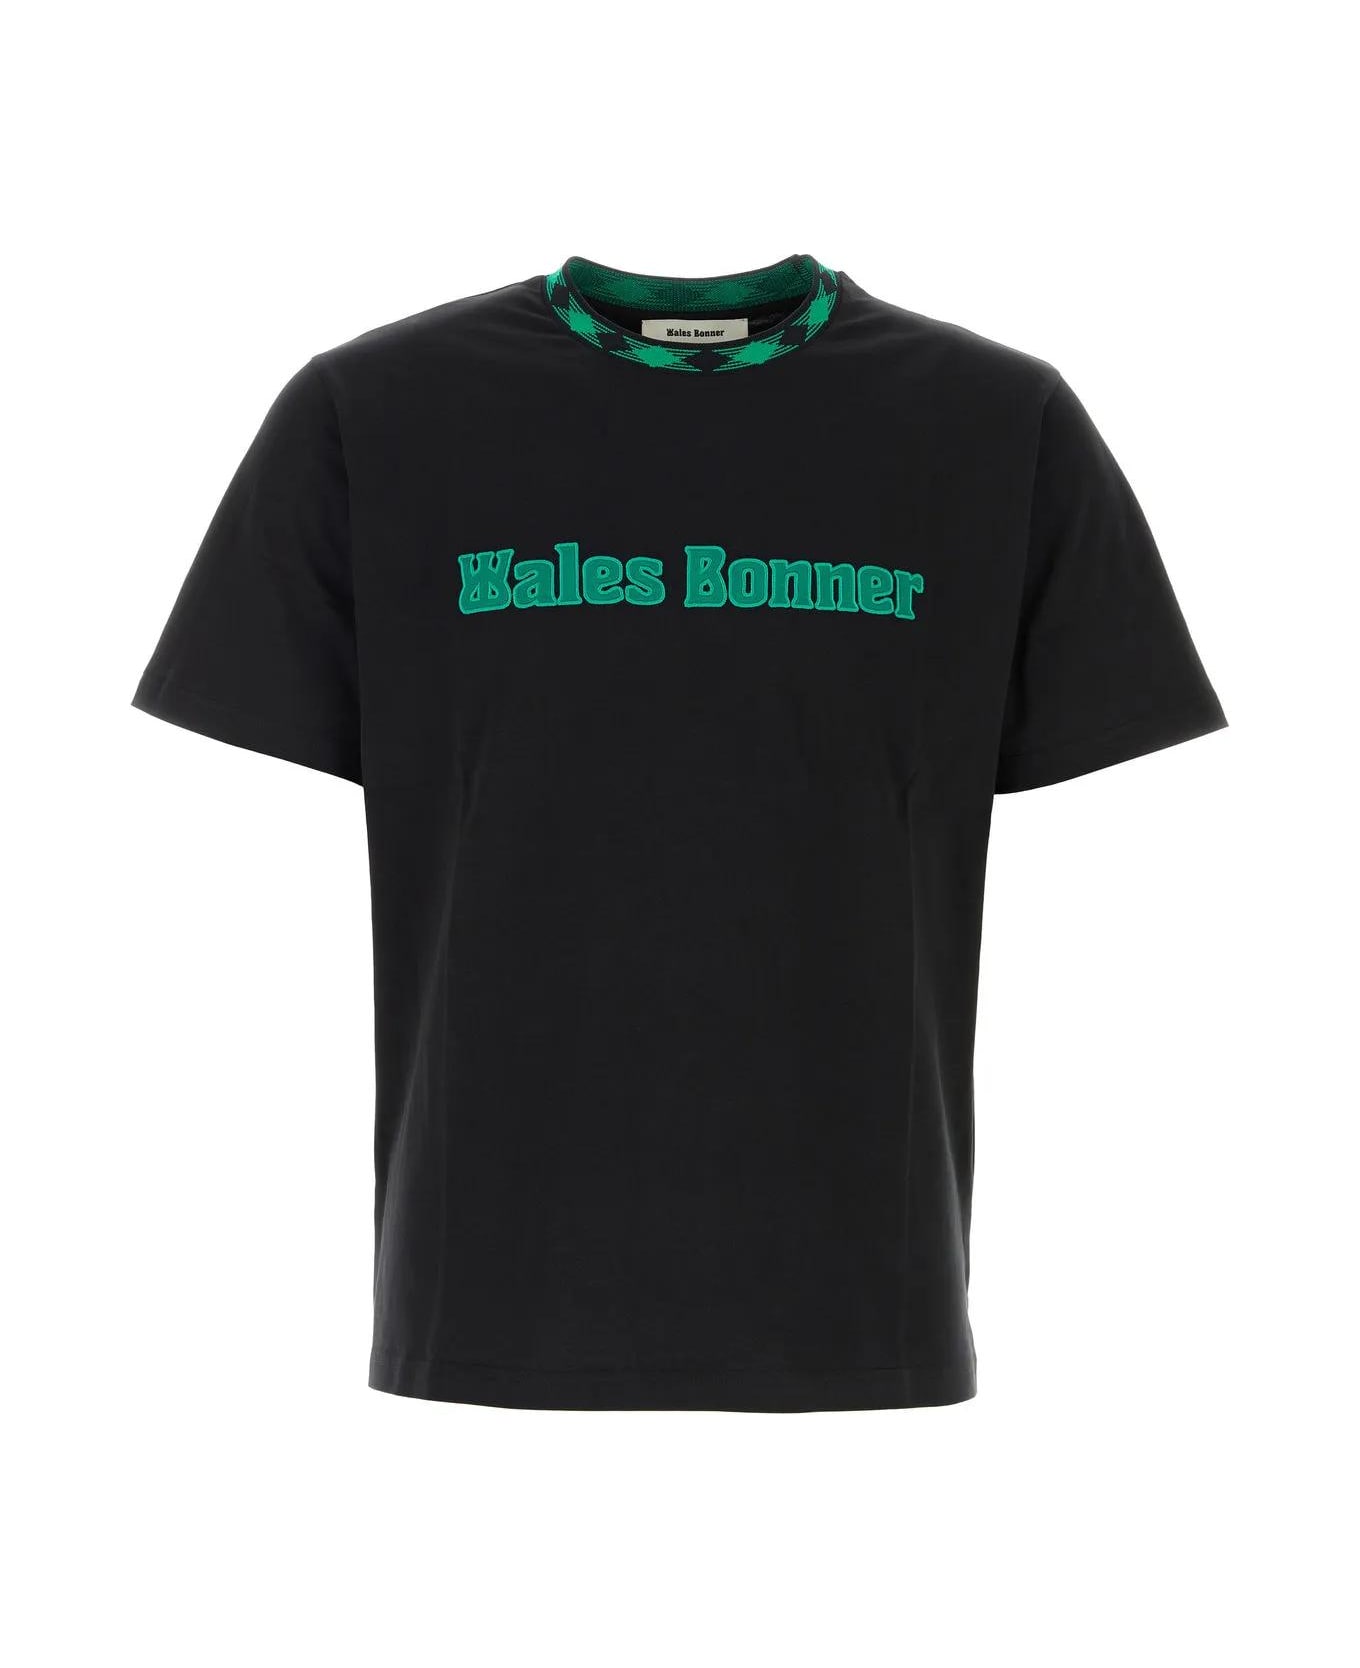 Wales Bonner Black Cotton Original T-shirt - Nero シャツ